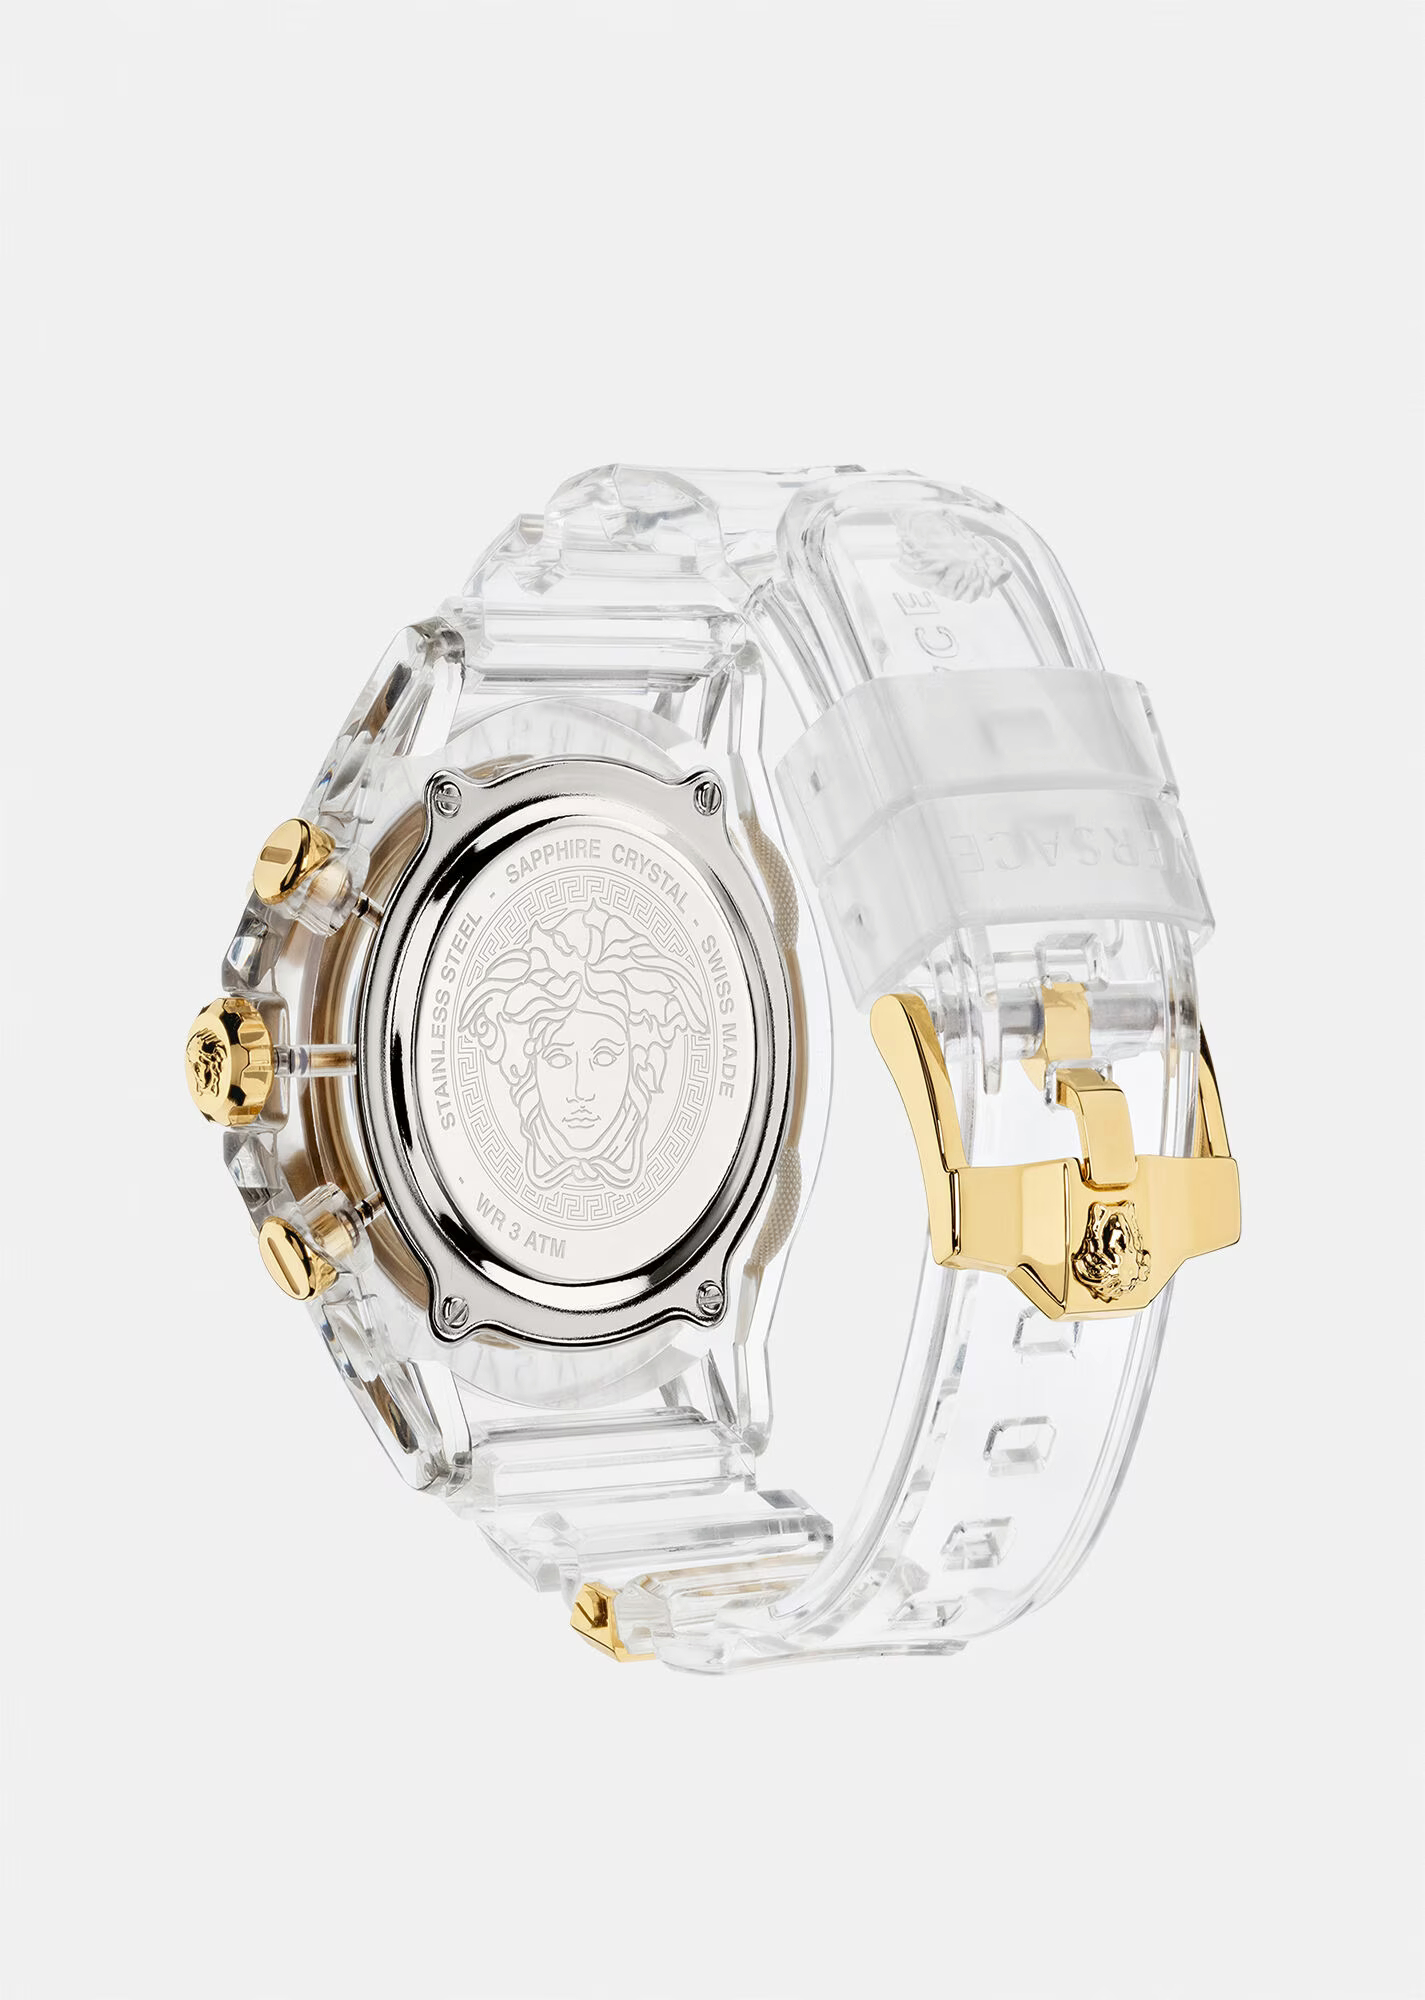 90 pvez7001 p0021 pnul 23 iconactivewatch watches versace online store 2 1 jpg